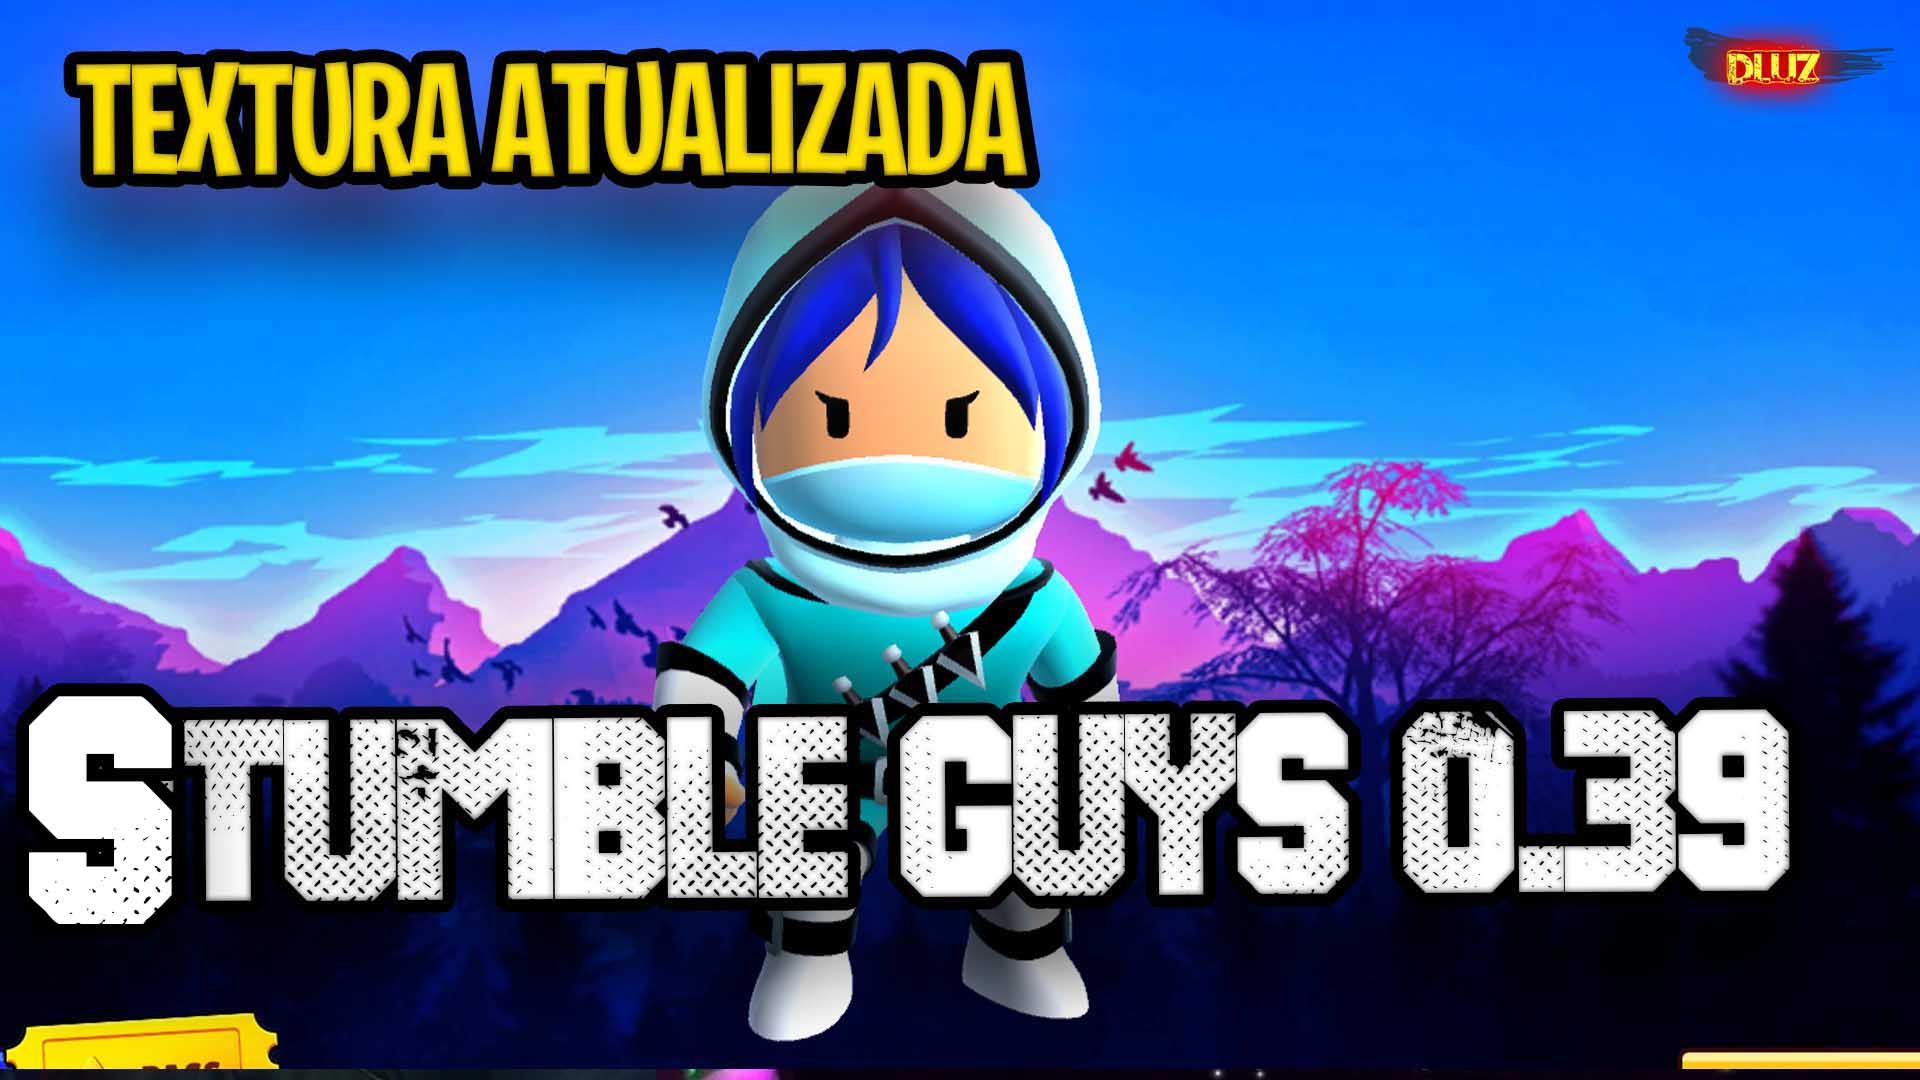 Stumble guys 0.44 com salas personalizadas - Dluz Games